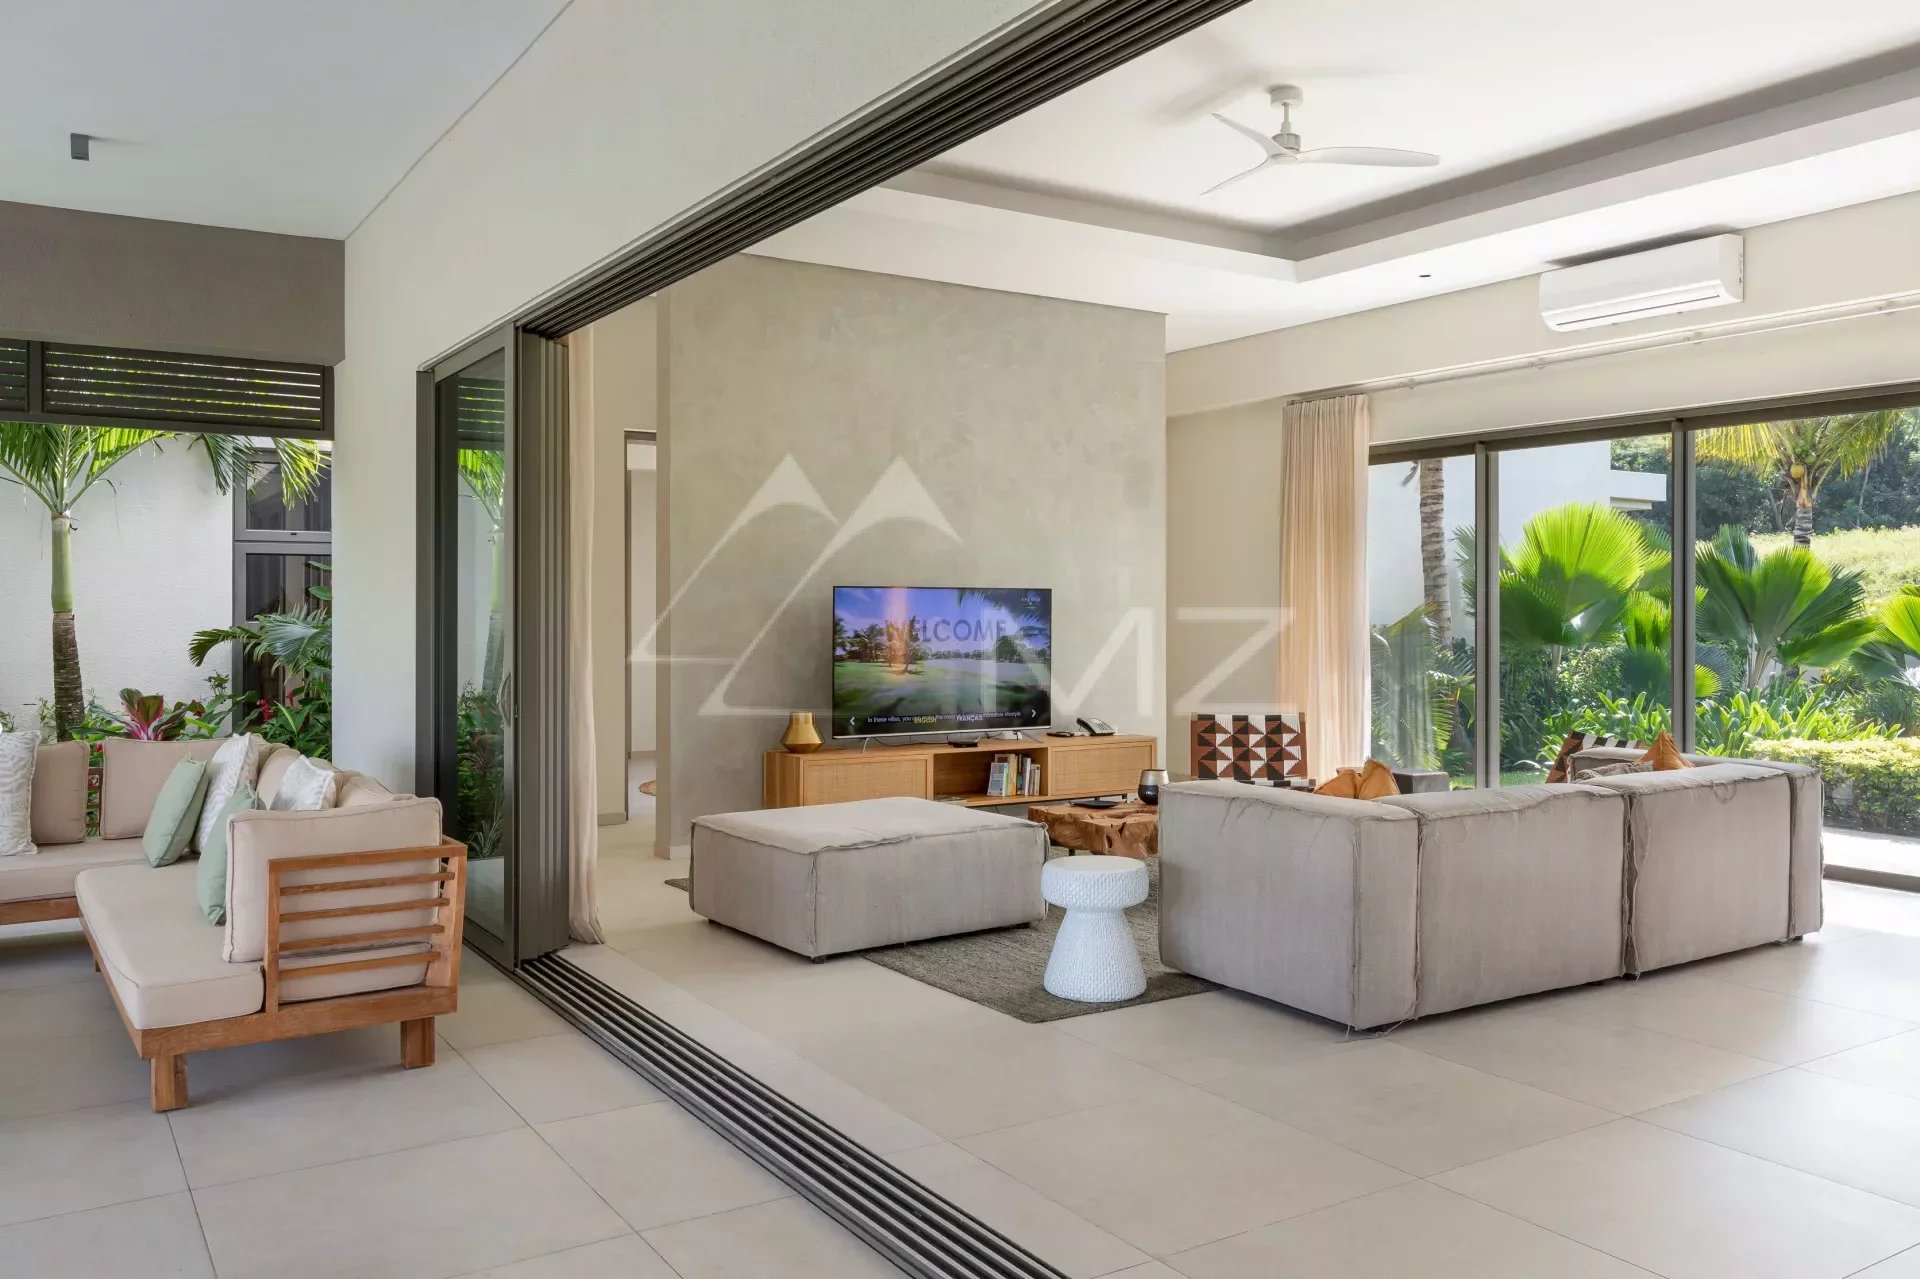 4 bedroom villa in a prestigious residential estate